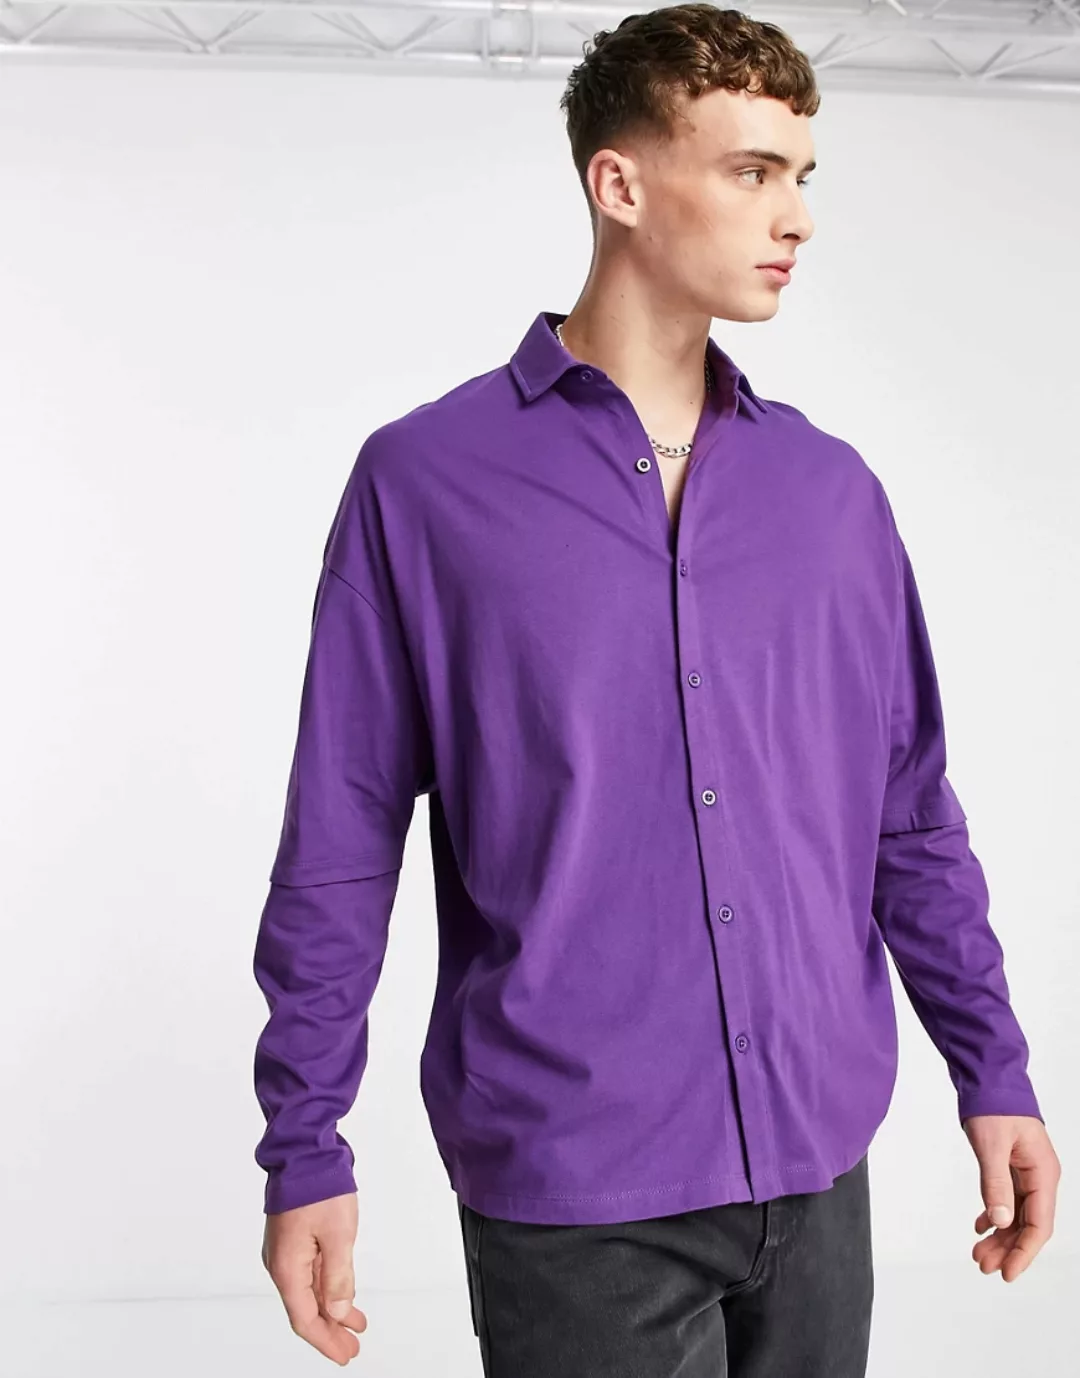 ASOS DSEIGN – Langärmliges, doppellagiges Oversize-Jerseyhemd in Lila-Viole günstig online kaufen